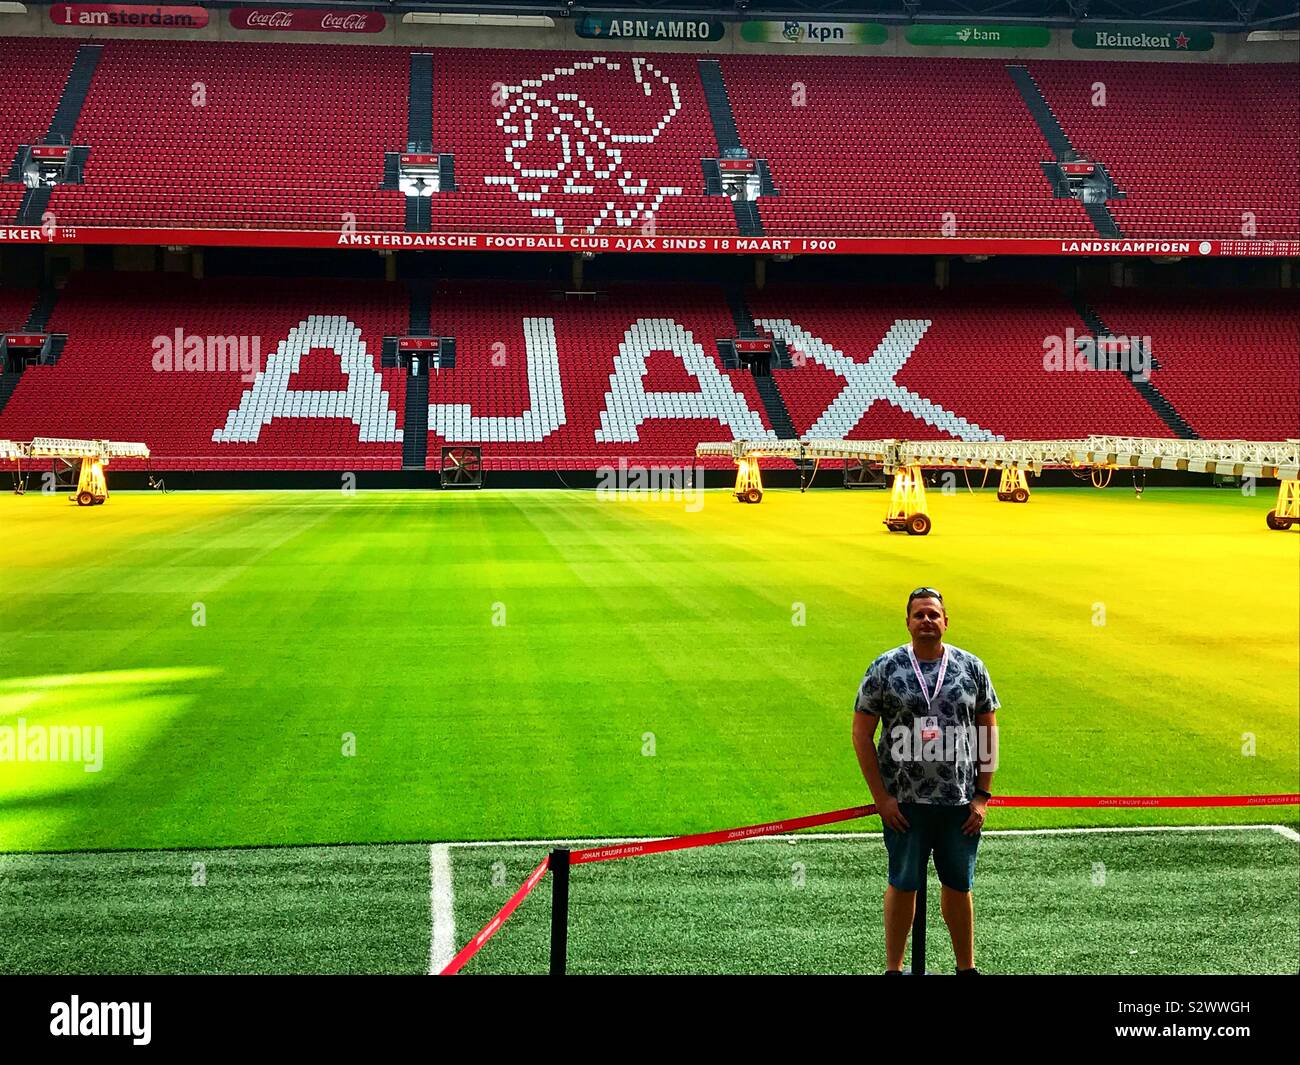 Ajax stadium tour Stock Photo - Alamy